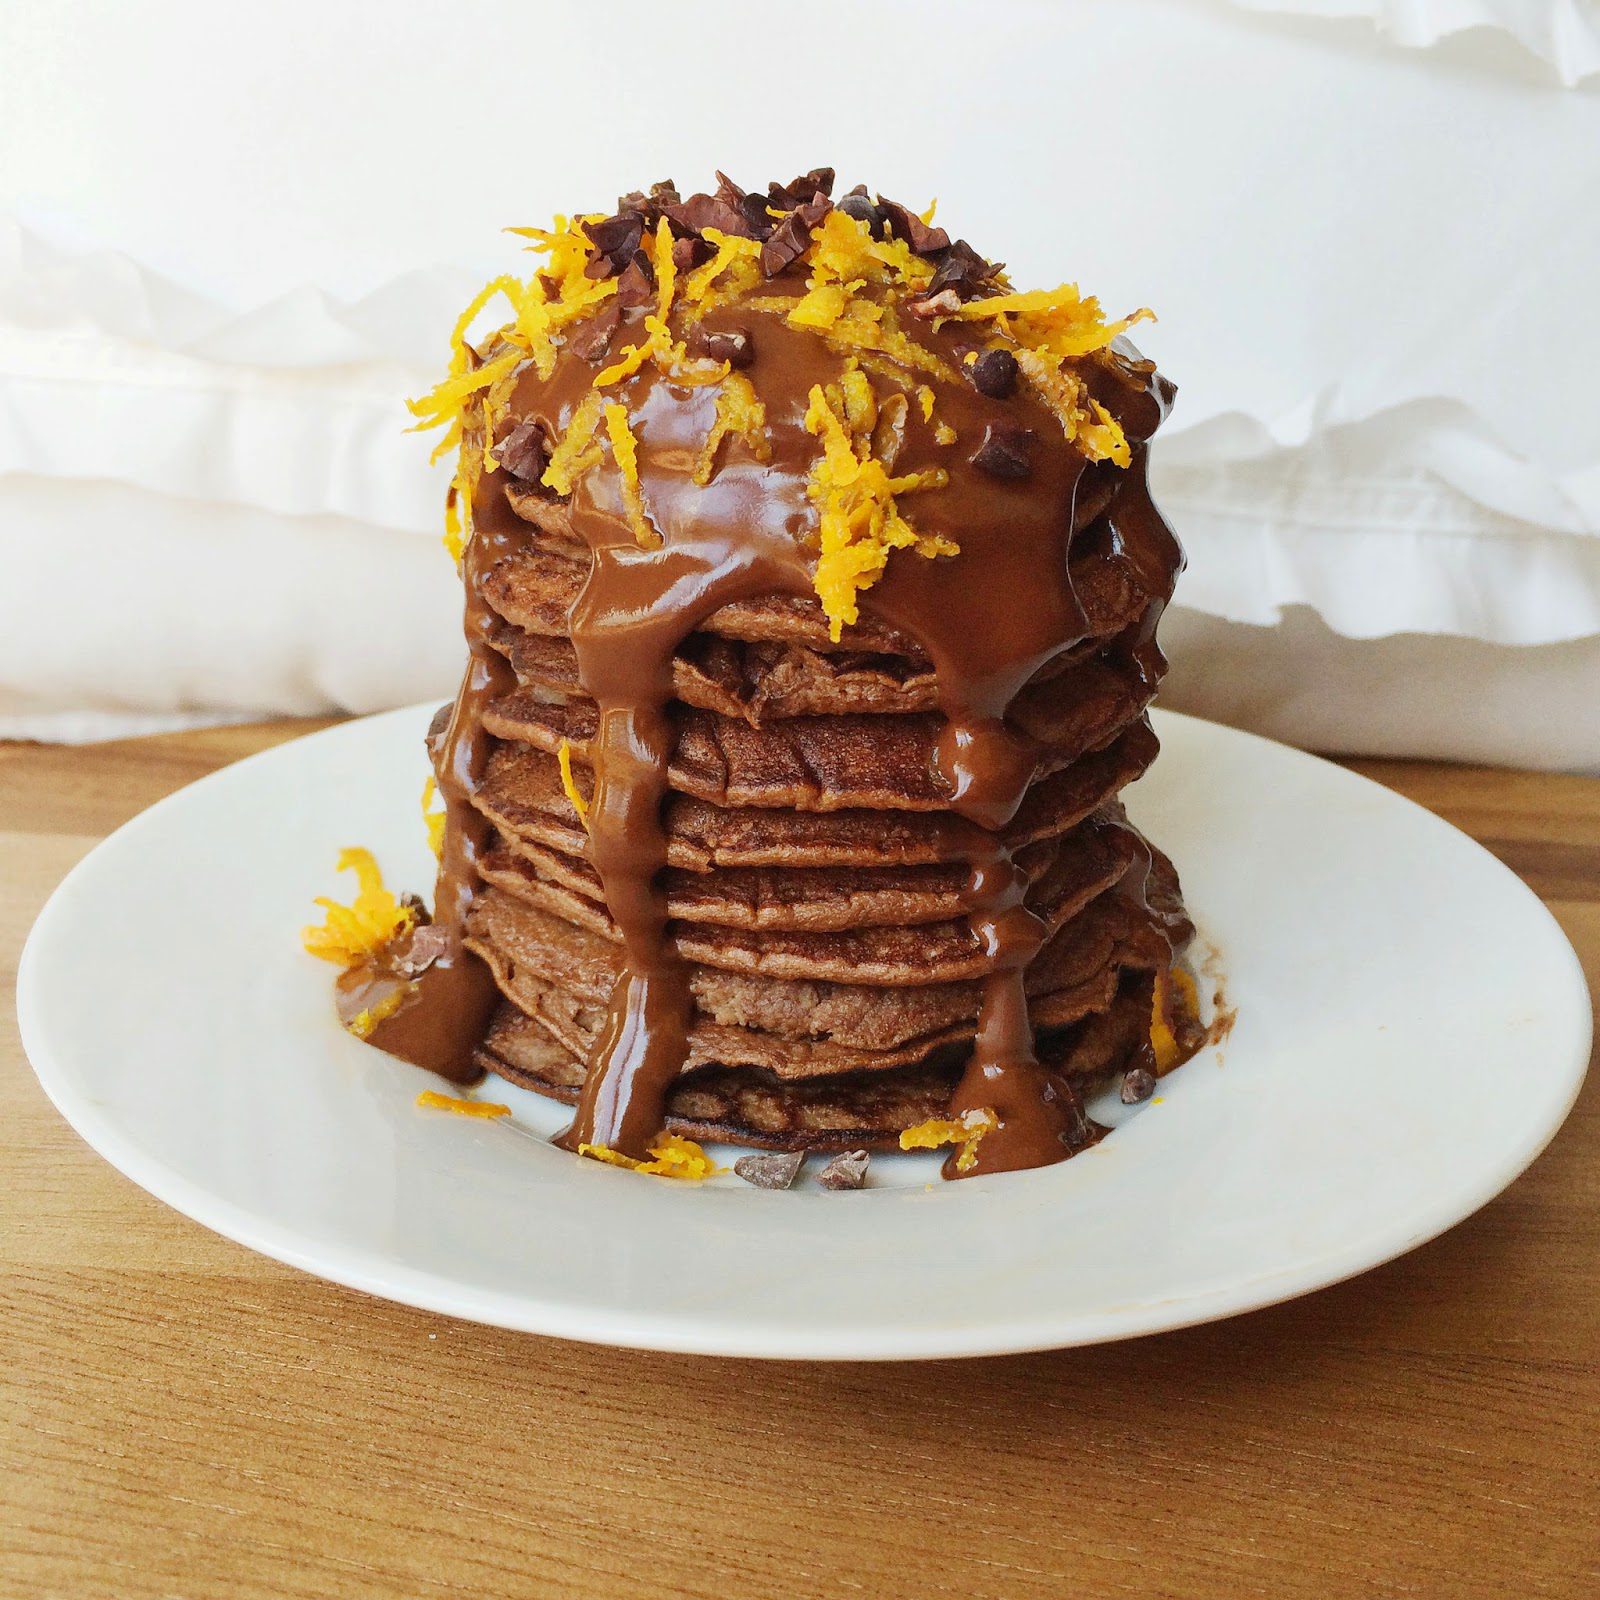 Chocolate Orange Pancakes with a Healthy Raw Chocolate Sauce